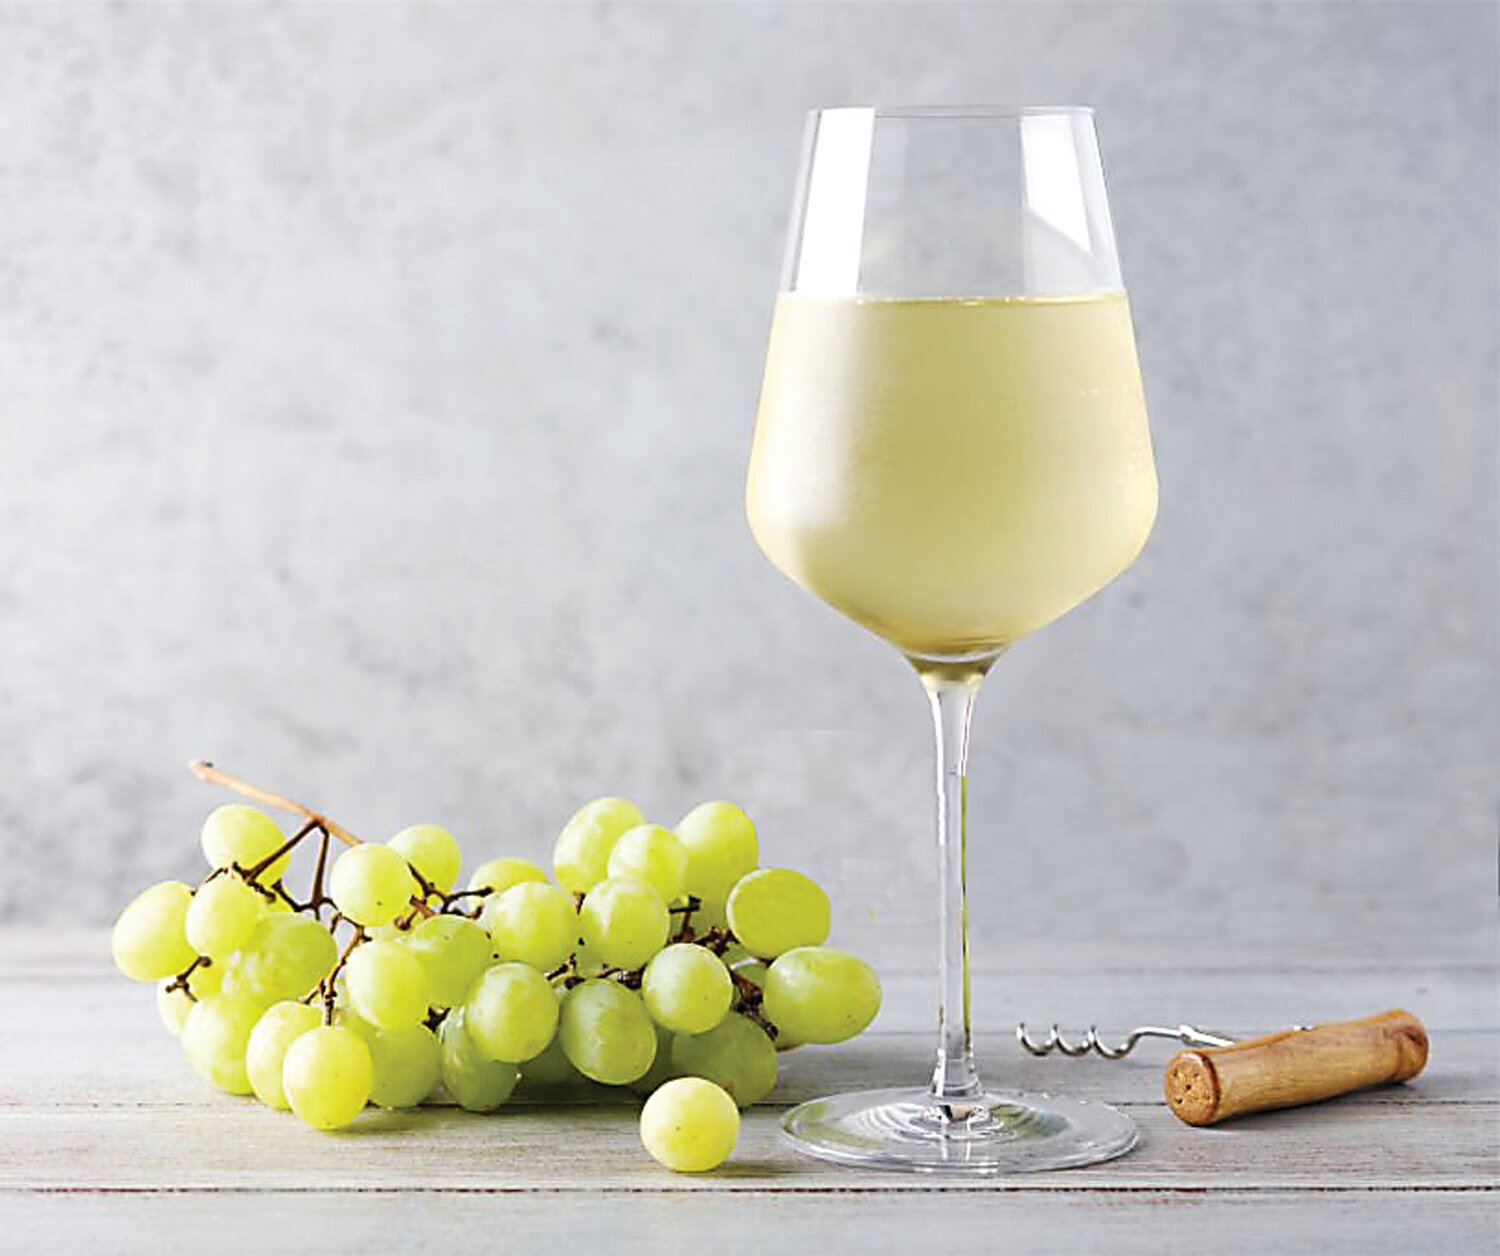 A glass of Sauvignon Blanc and grapes.